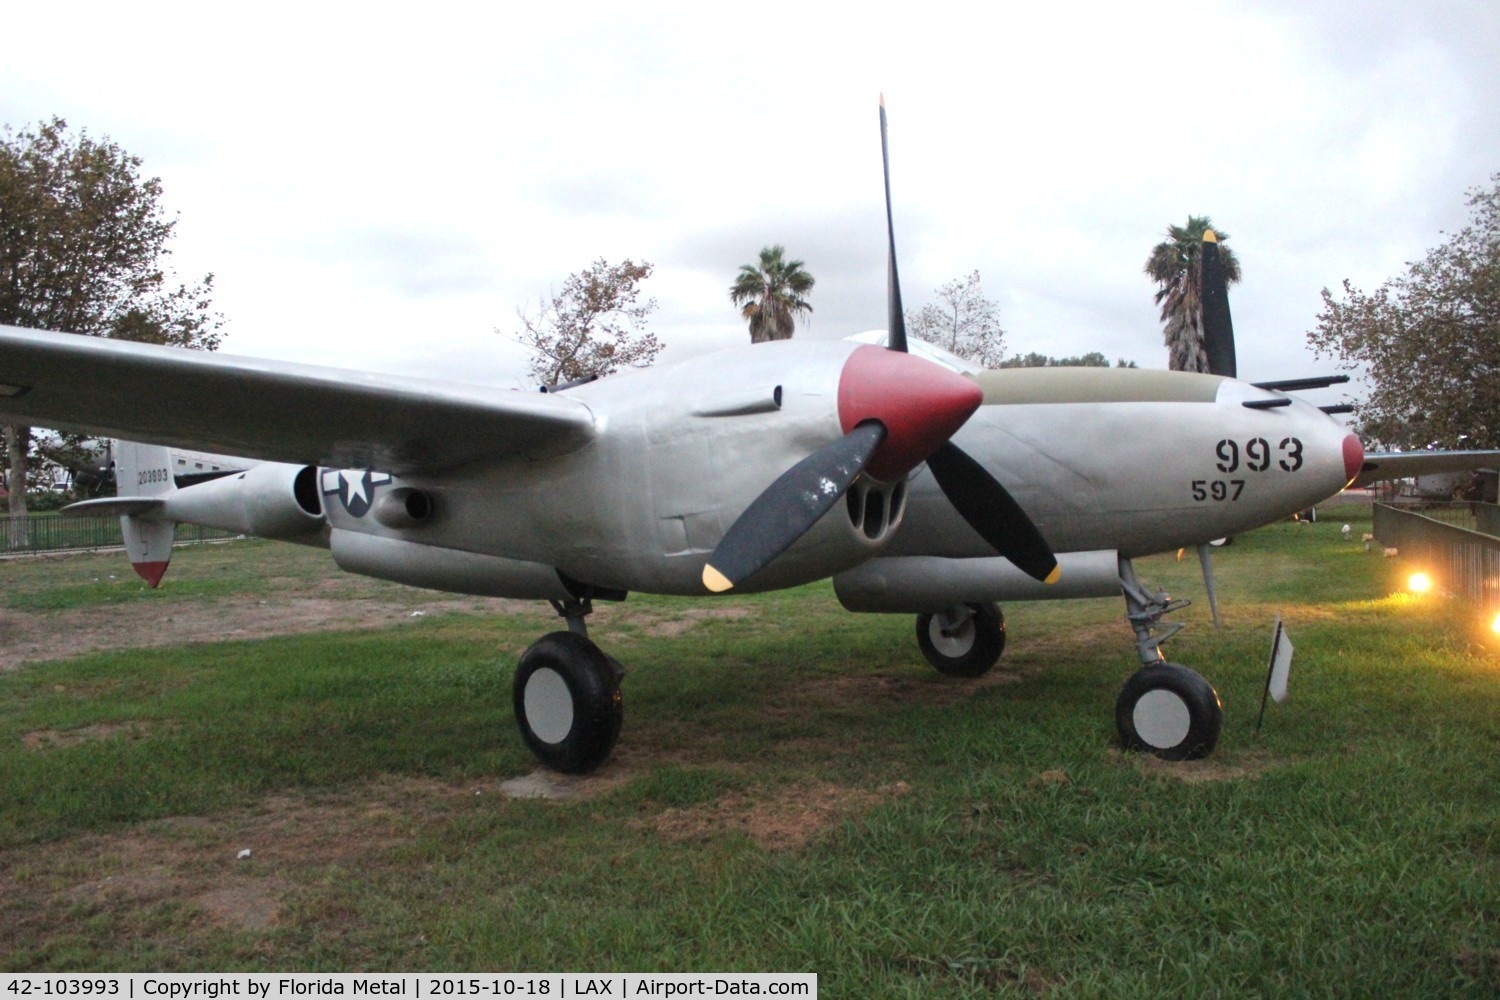 42-103993, Lockheed P-38 Lightning Replica C/N None, P-38 at Proud Bird Restaurant